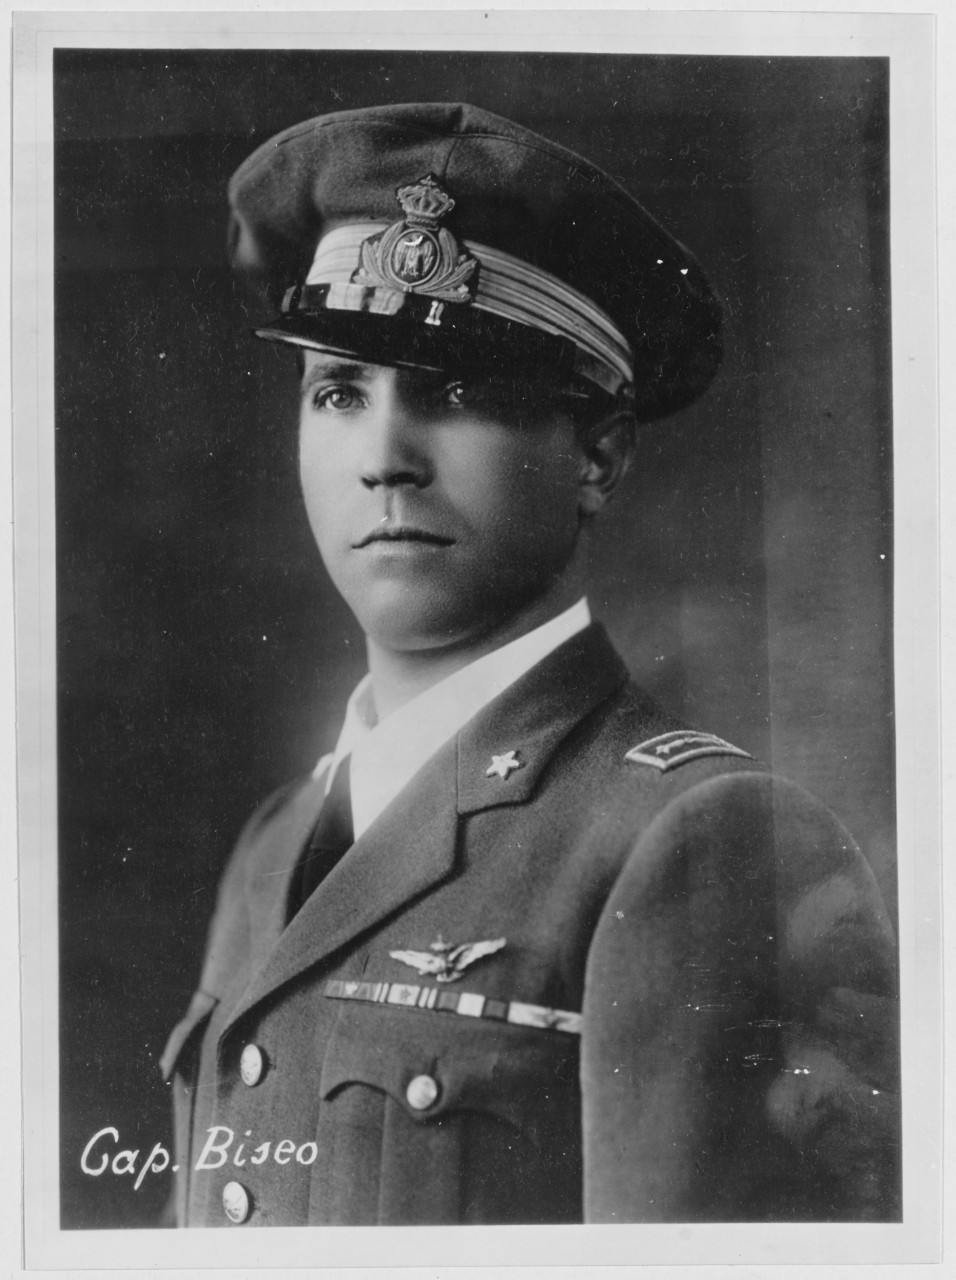 Captain Biseo, Italian Aviators who flew Savoia-Machetti Seaplanes Trans-Atlantic, 1933